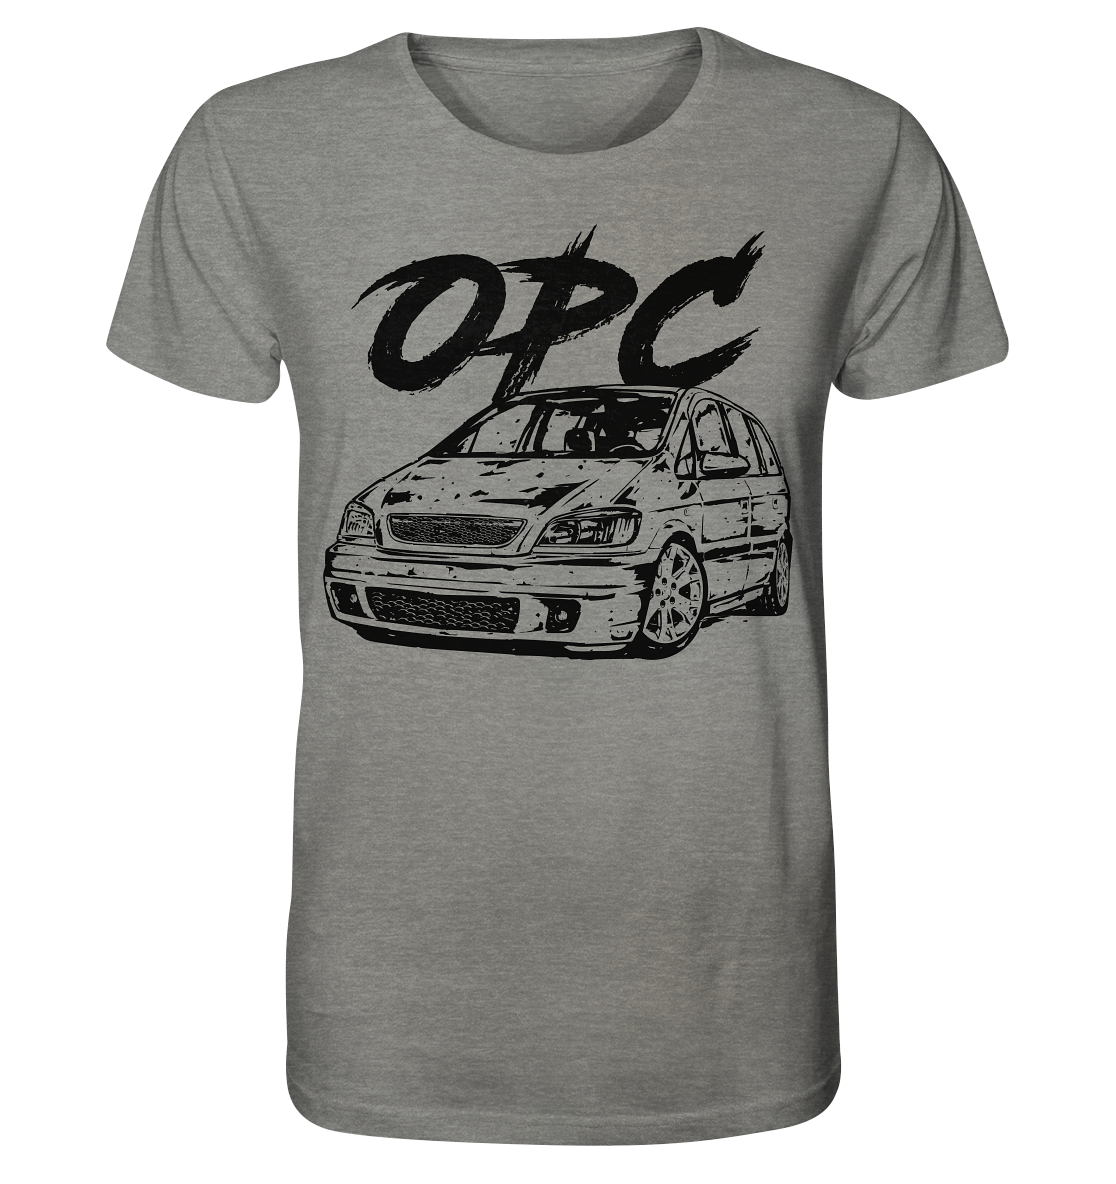 COD_OGKZAODIRTY - Organic Shirt (meliert)